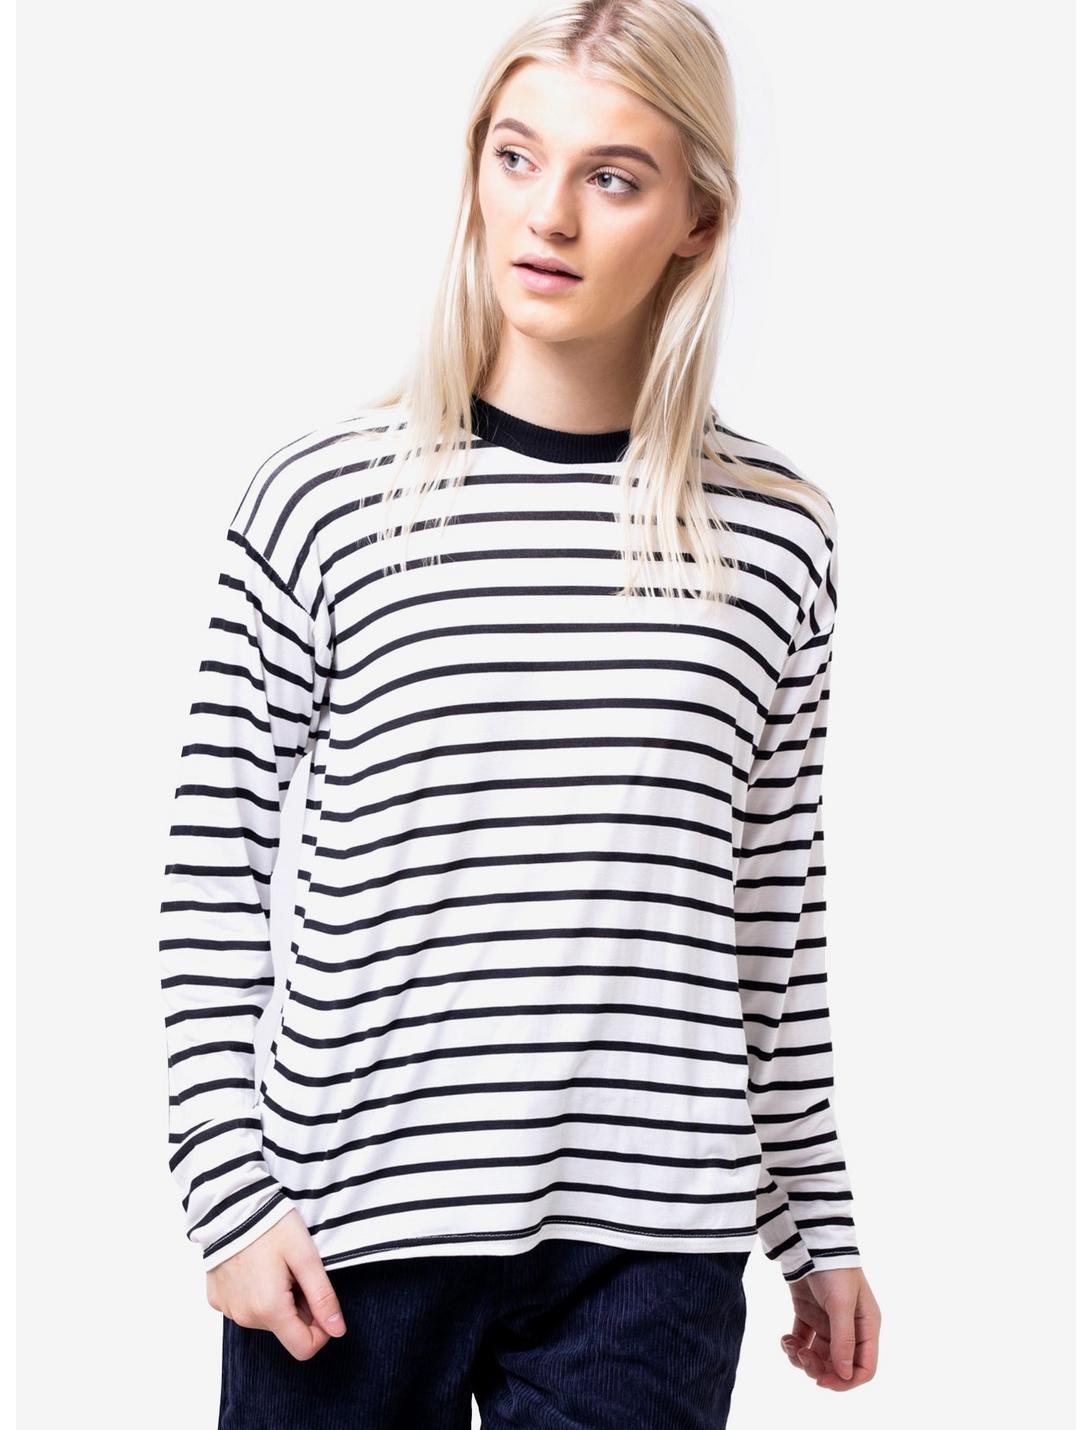 Daisy Street Black & White Striped Girls Long-Sleeve T-Shirt, BLACK  WHITE, hi-res